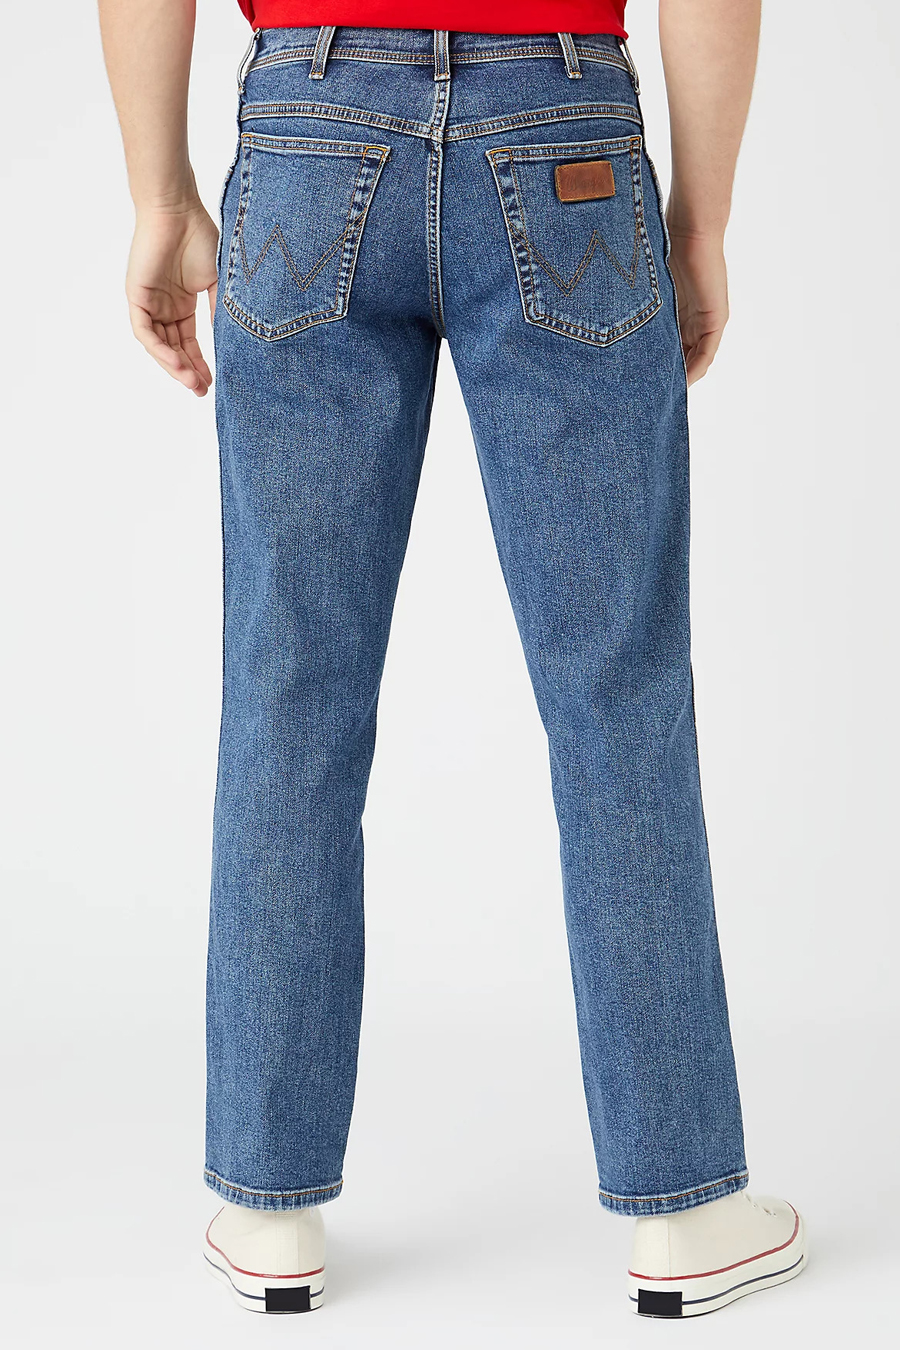 Jeans WRANGLER W12133010